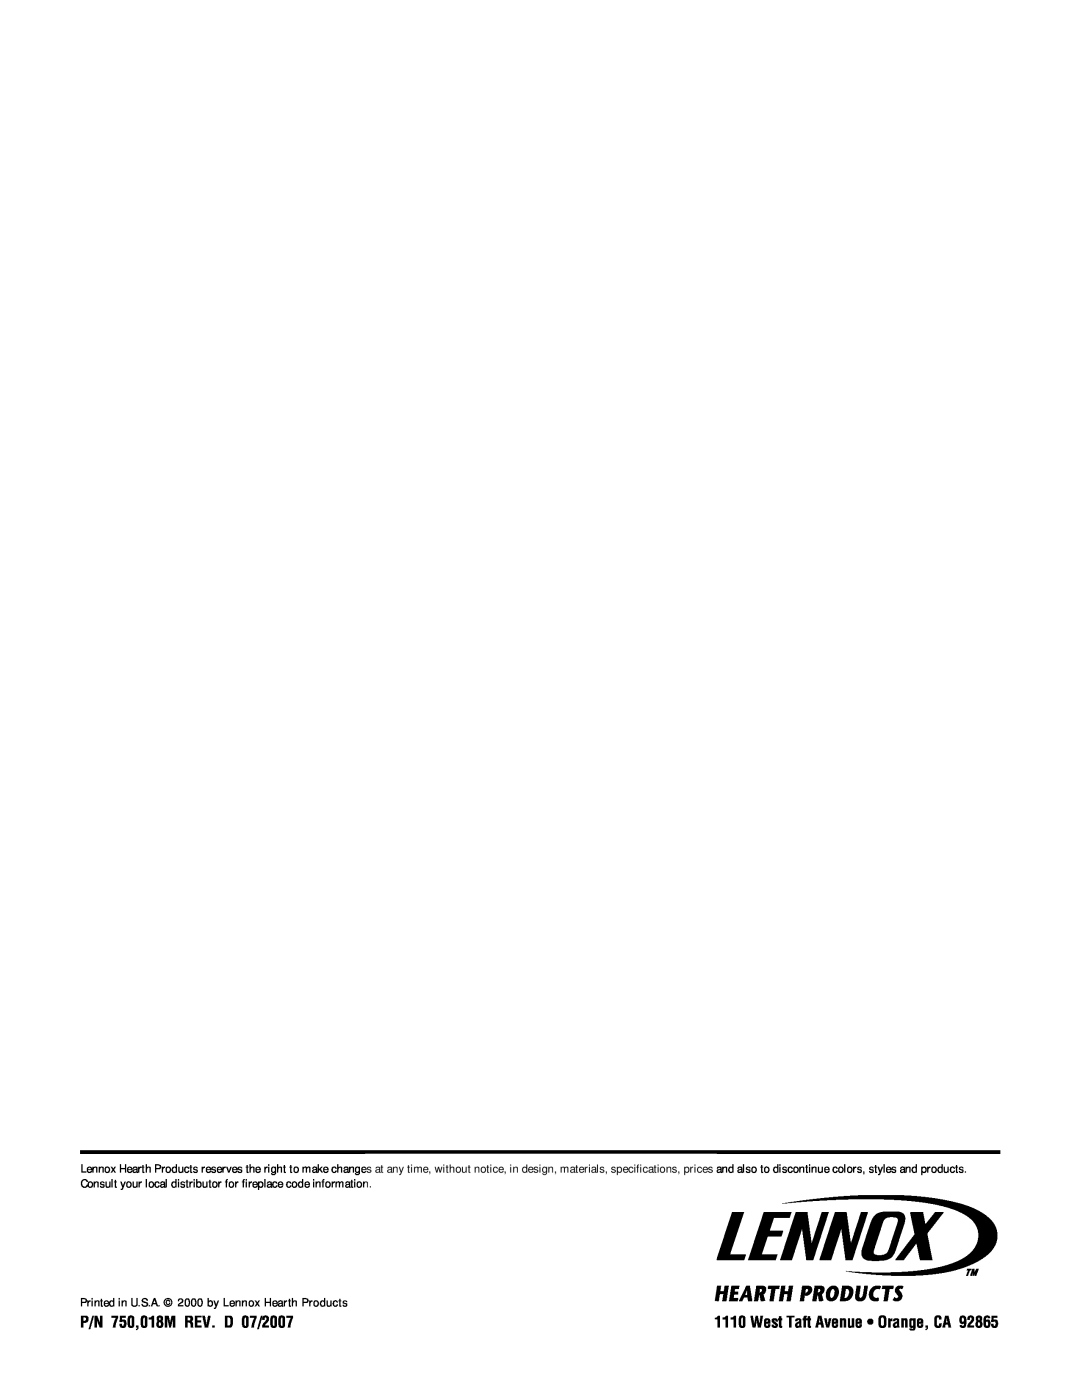 Lennox Hearth FGCK manual P/N 750,018M REV. D 07/2007, West Taft Avenue Orange, CA 